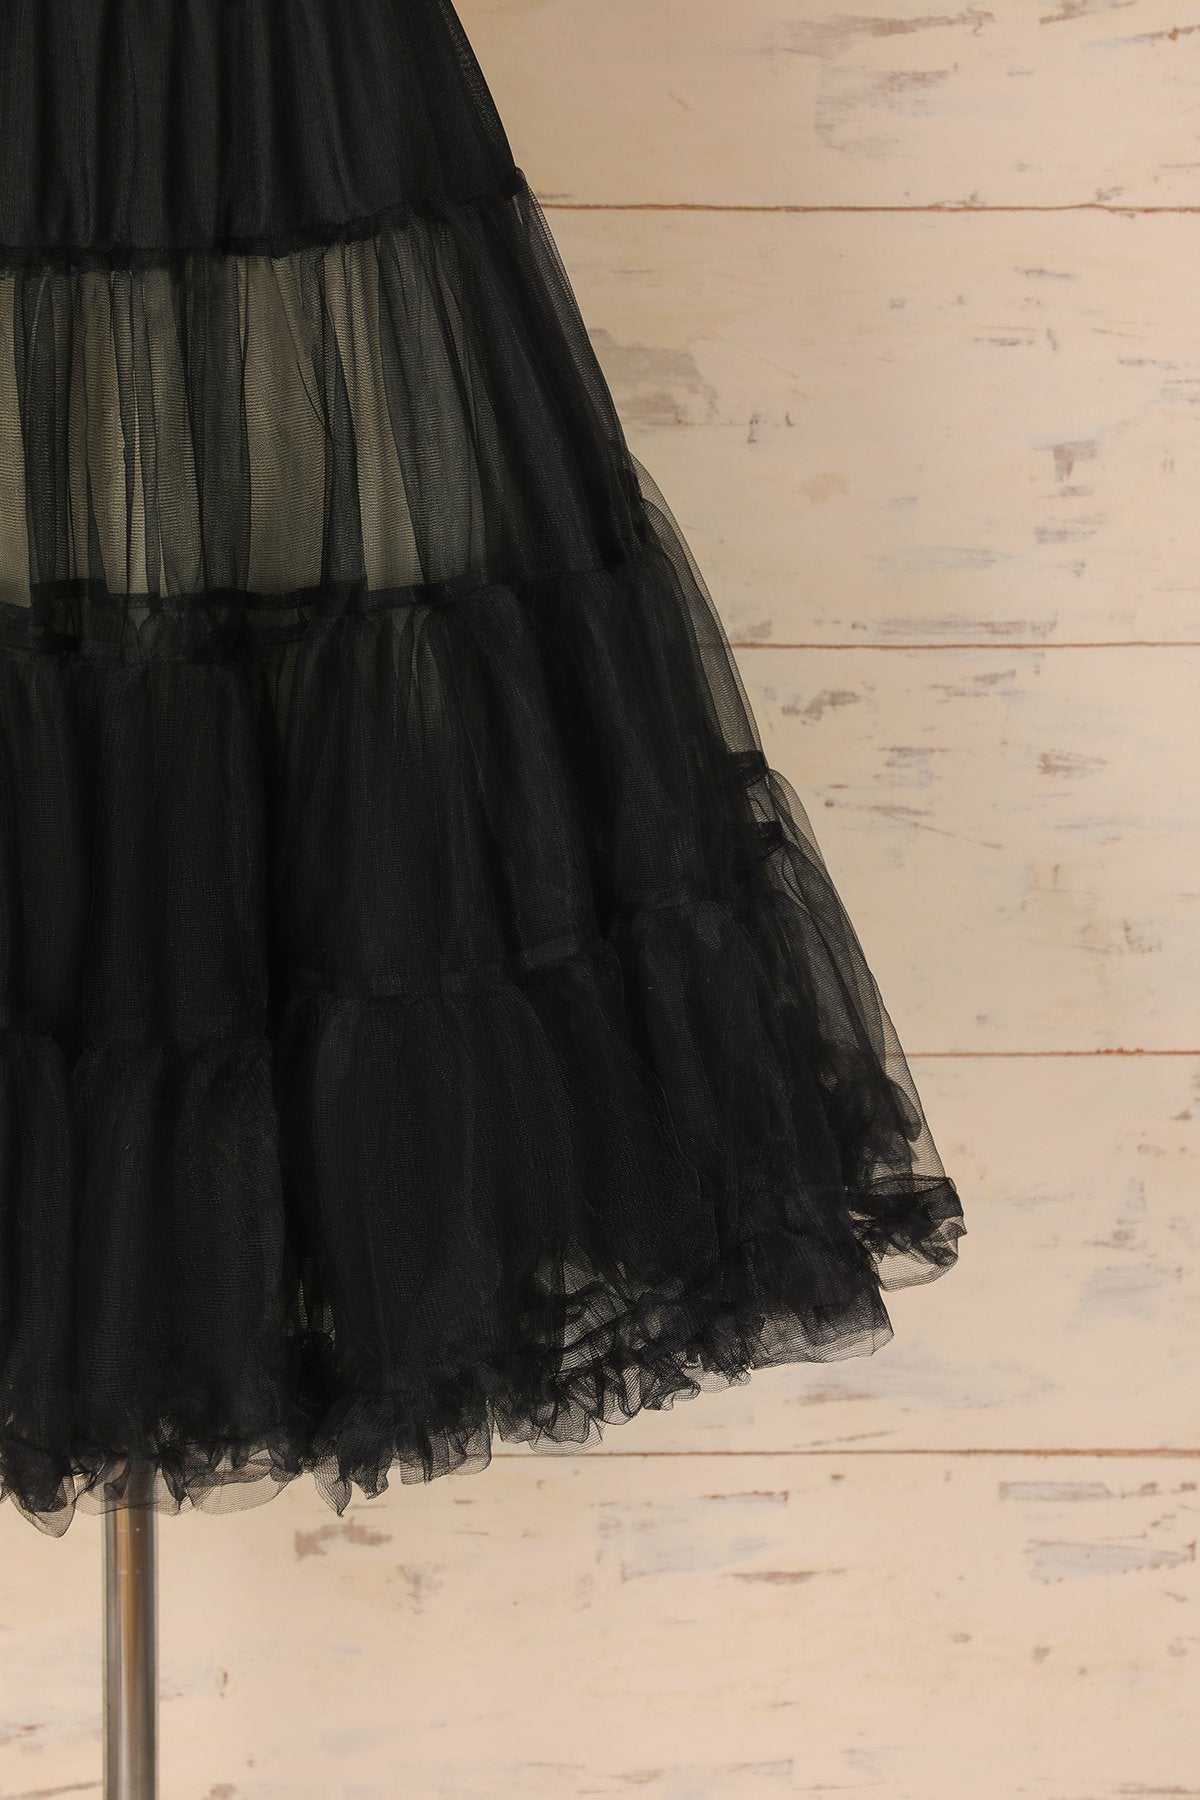 Black Tulle Petticoat - ZAPAKA